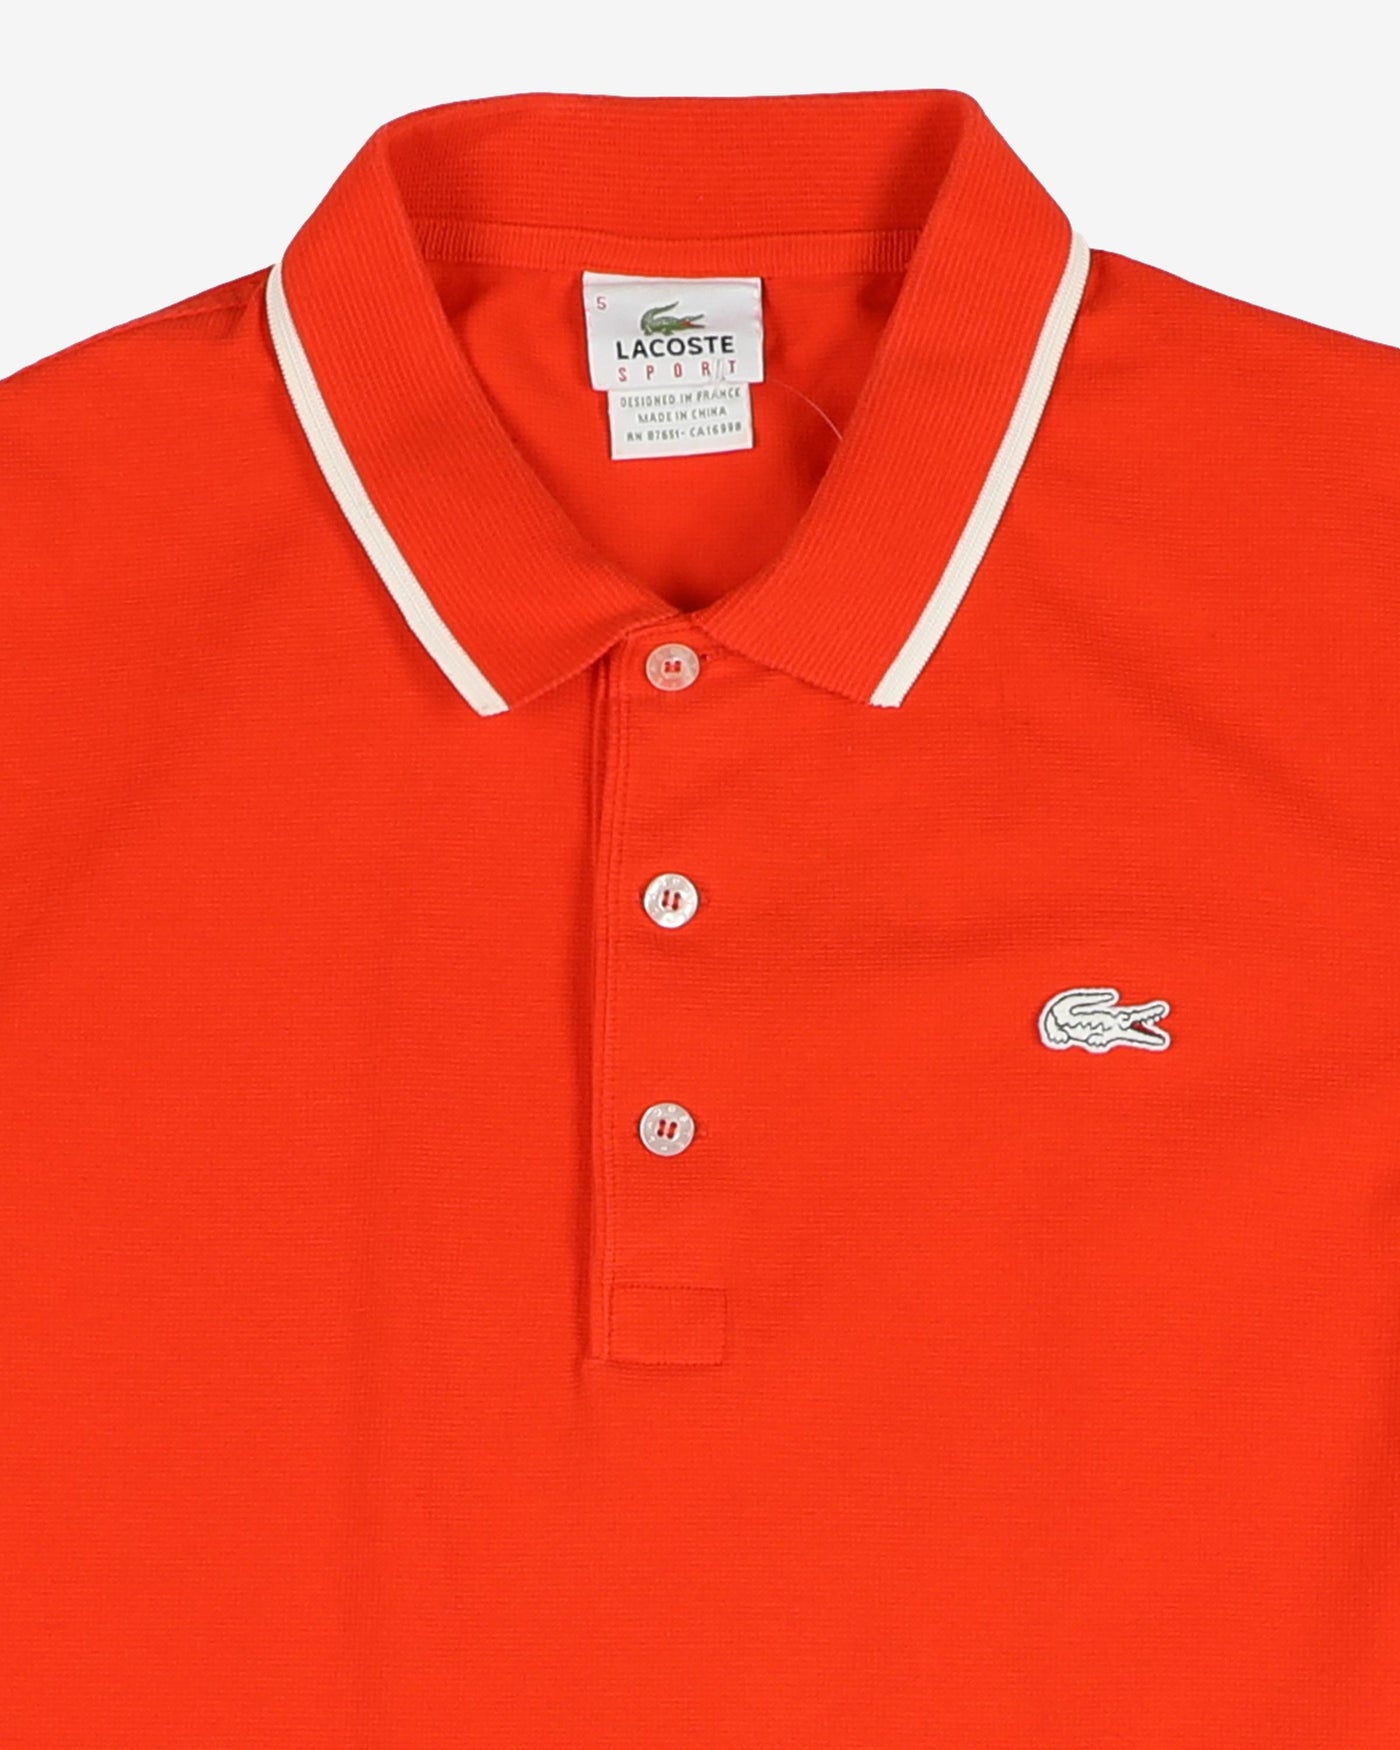 lacoste sport orange chest logo polo shirt - m